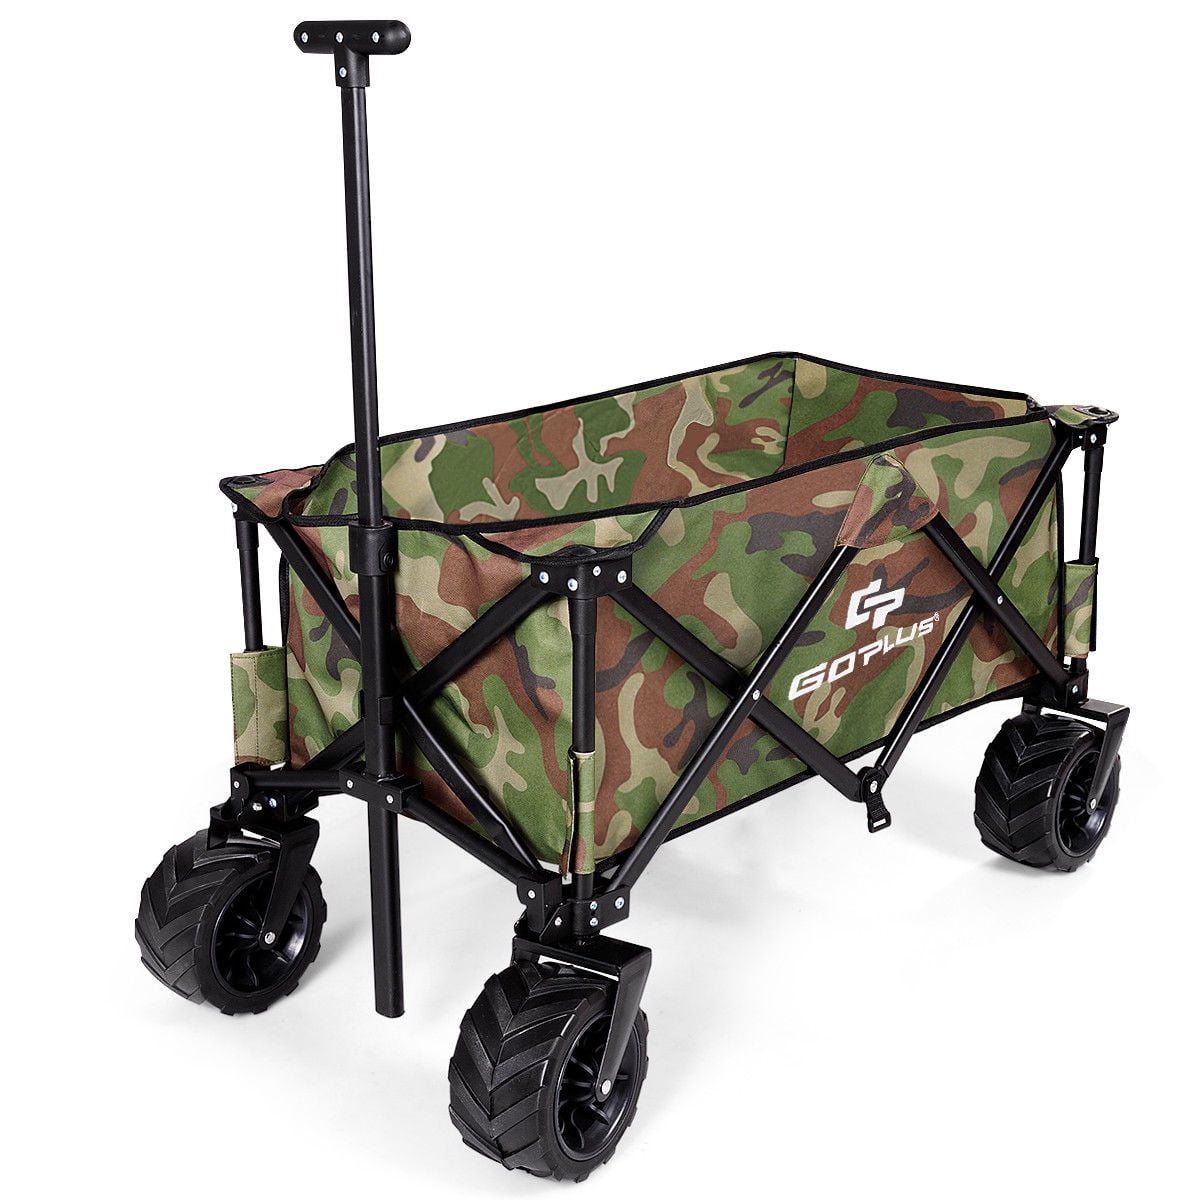 Collapsible Folding Wagon Cart W/ Canopy Outdoor Portable Utility Garden Trolley